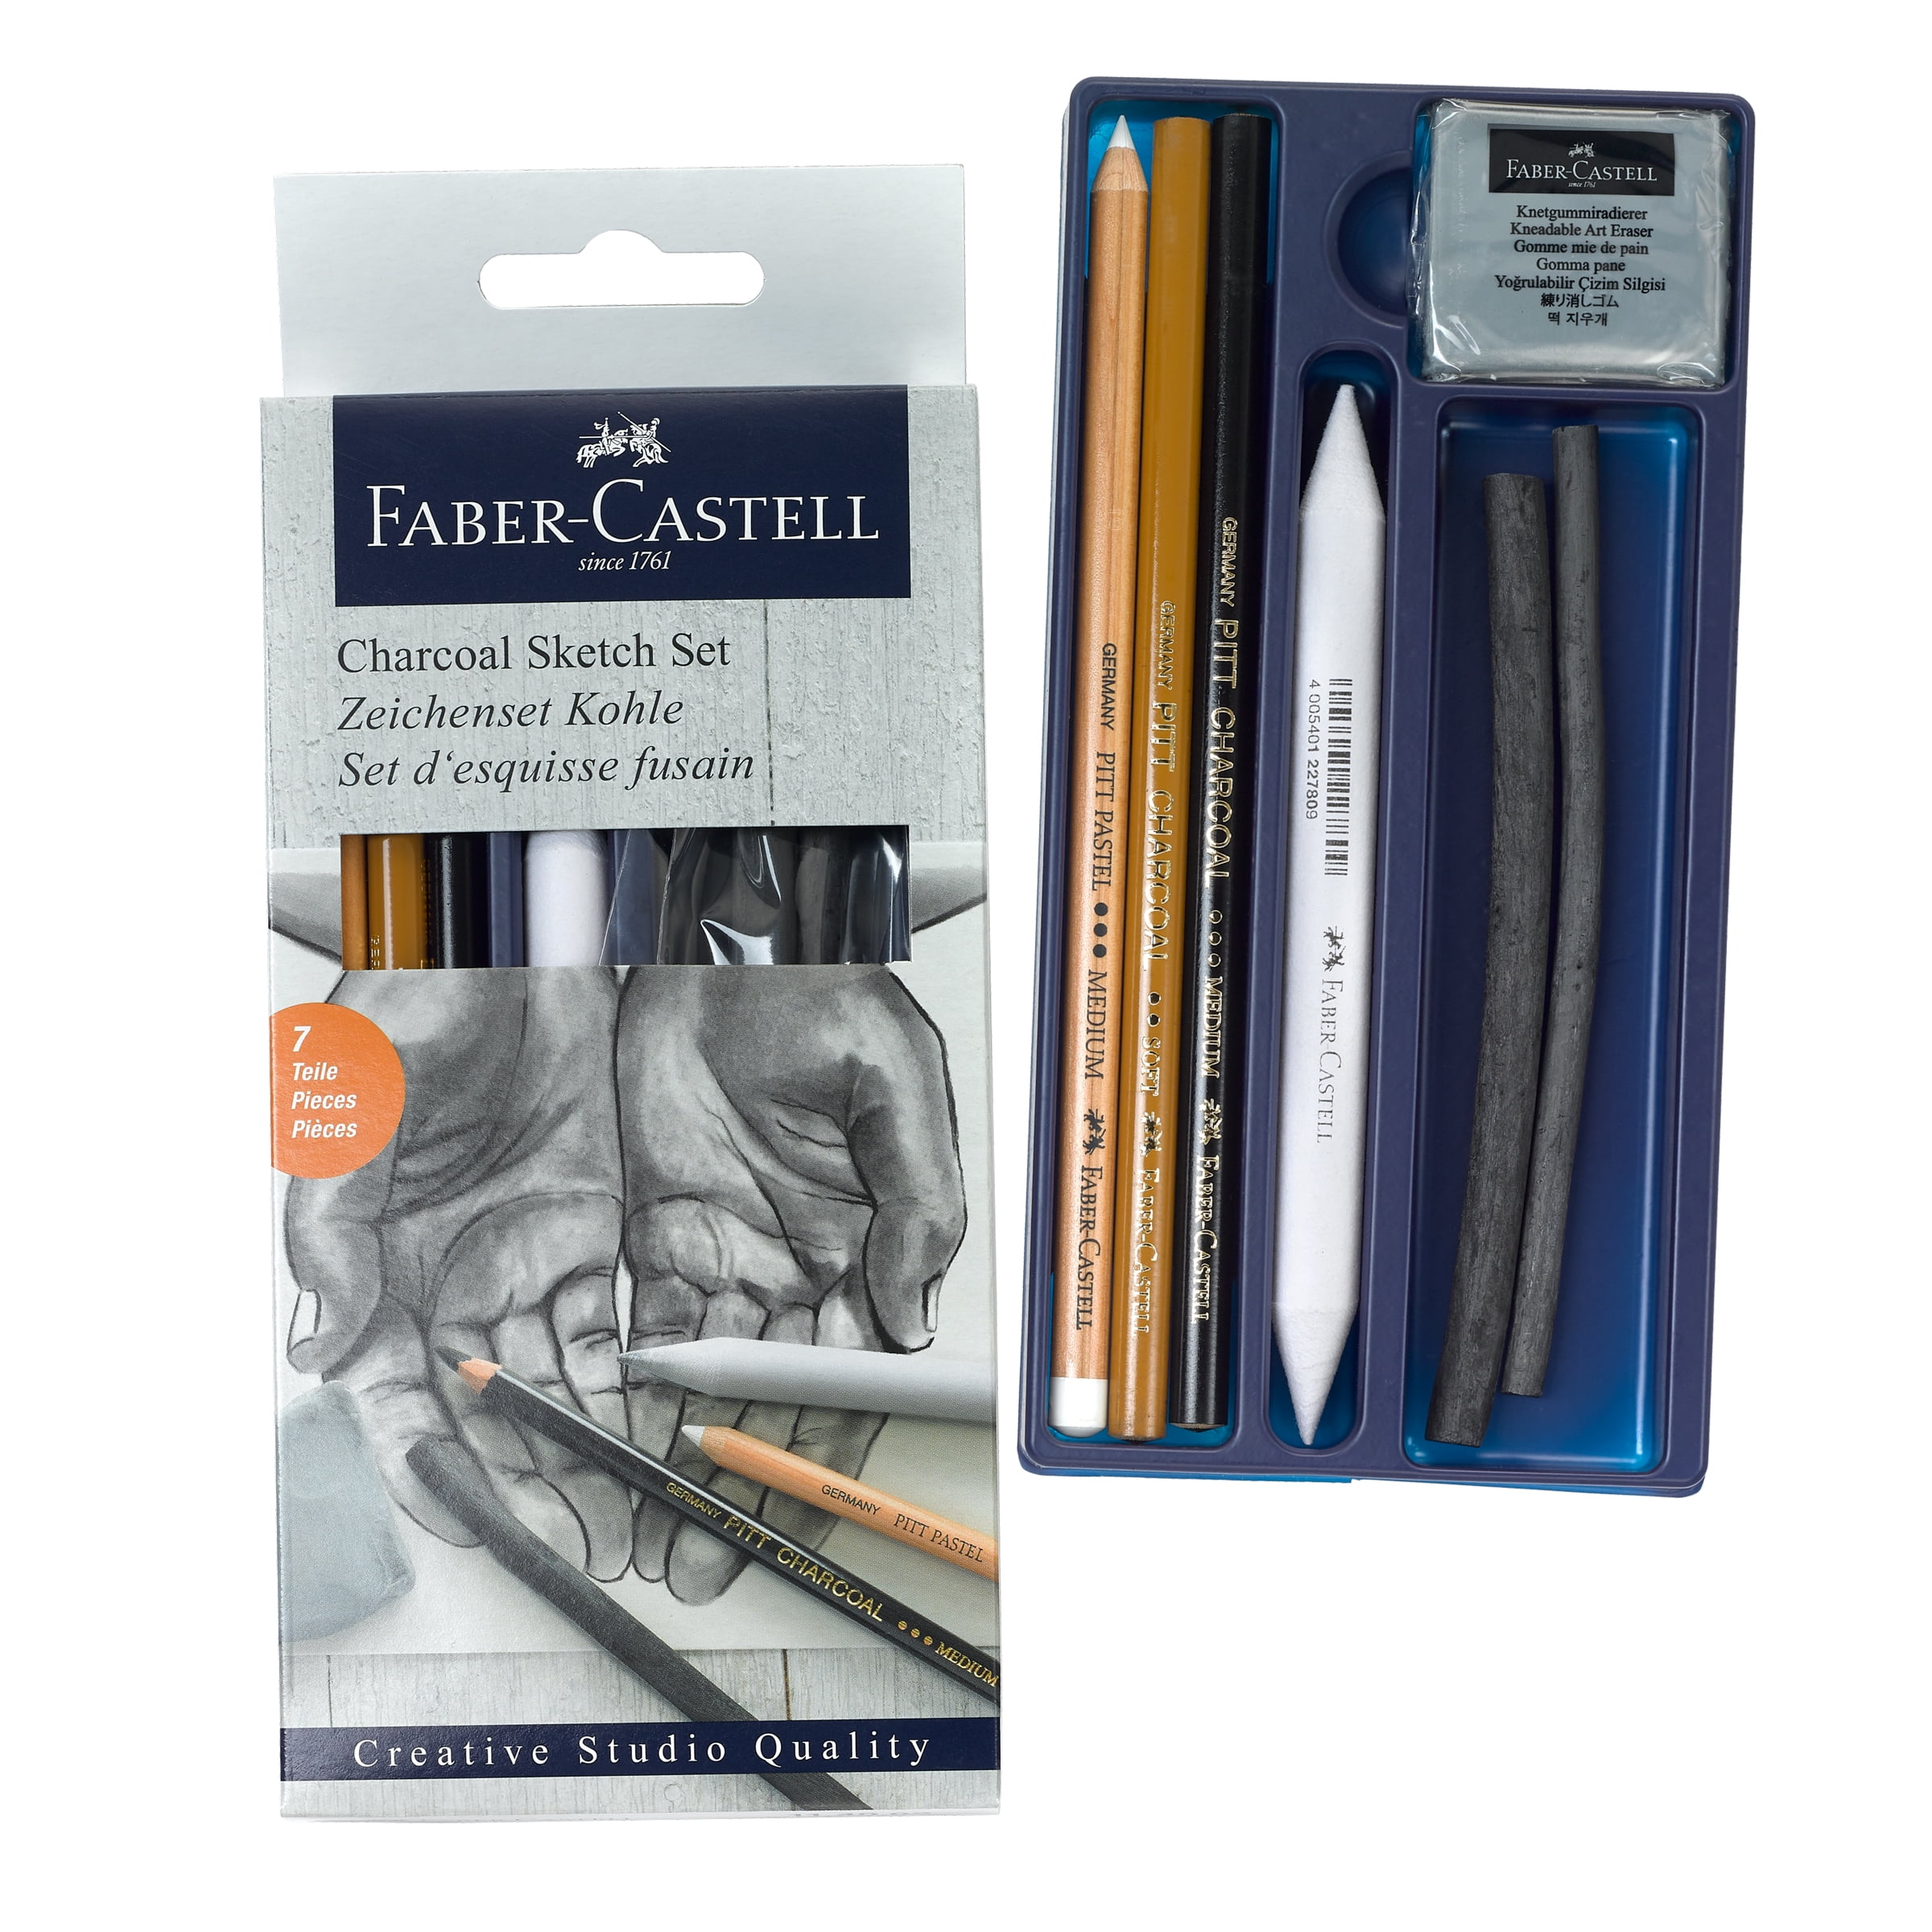 Faber-Castell Charcoal Sketch Set – Beginner and Adult Art Set 